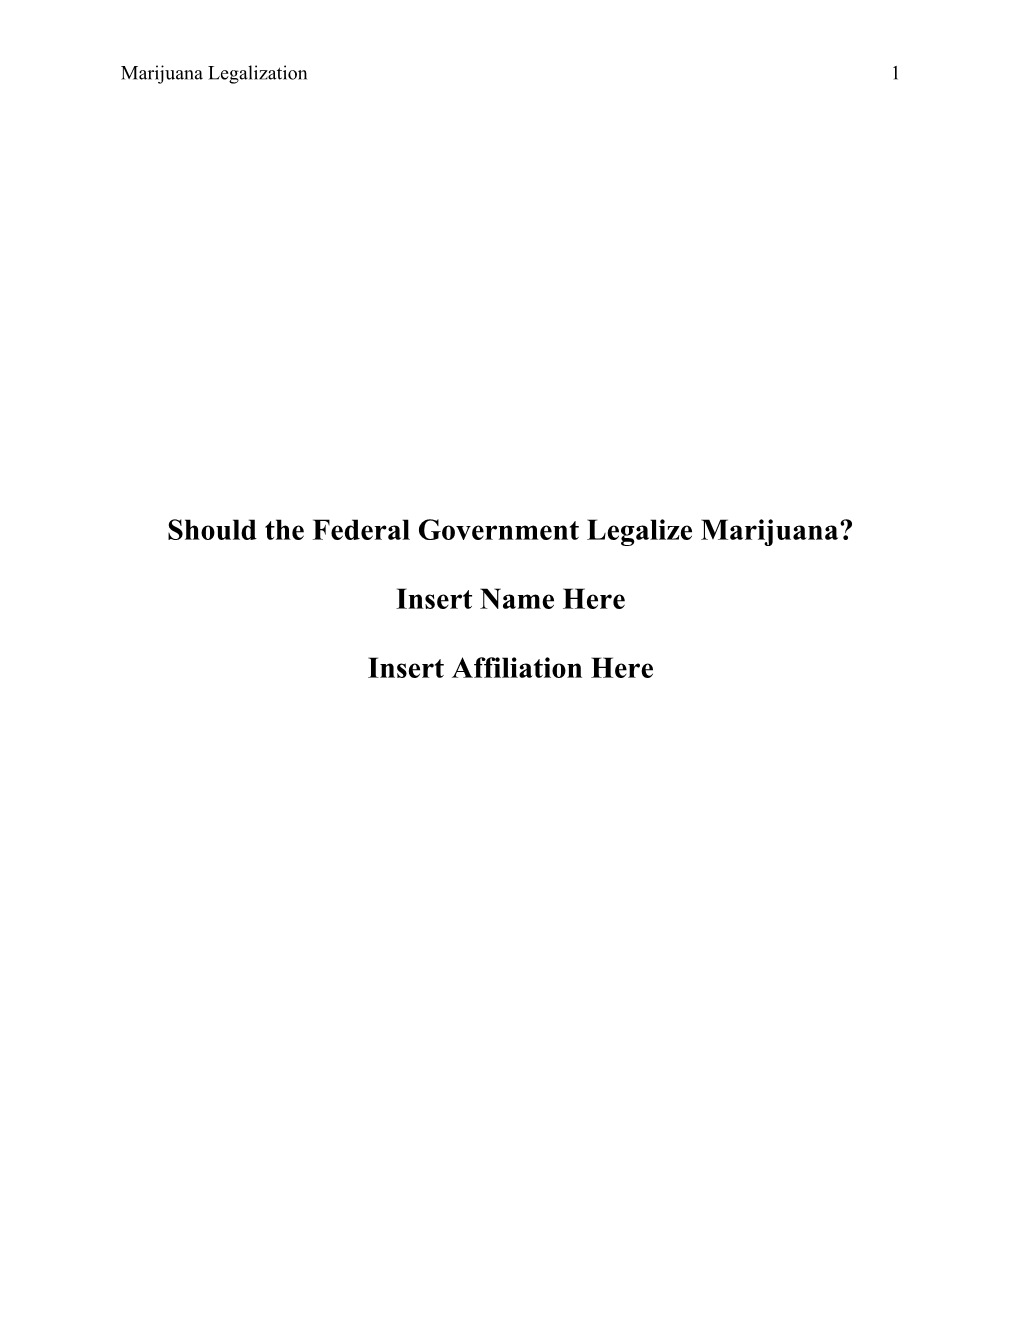 Should the Federal Government Legalize Marijuana